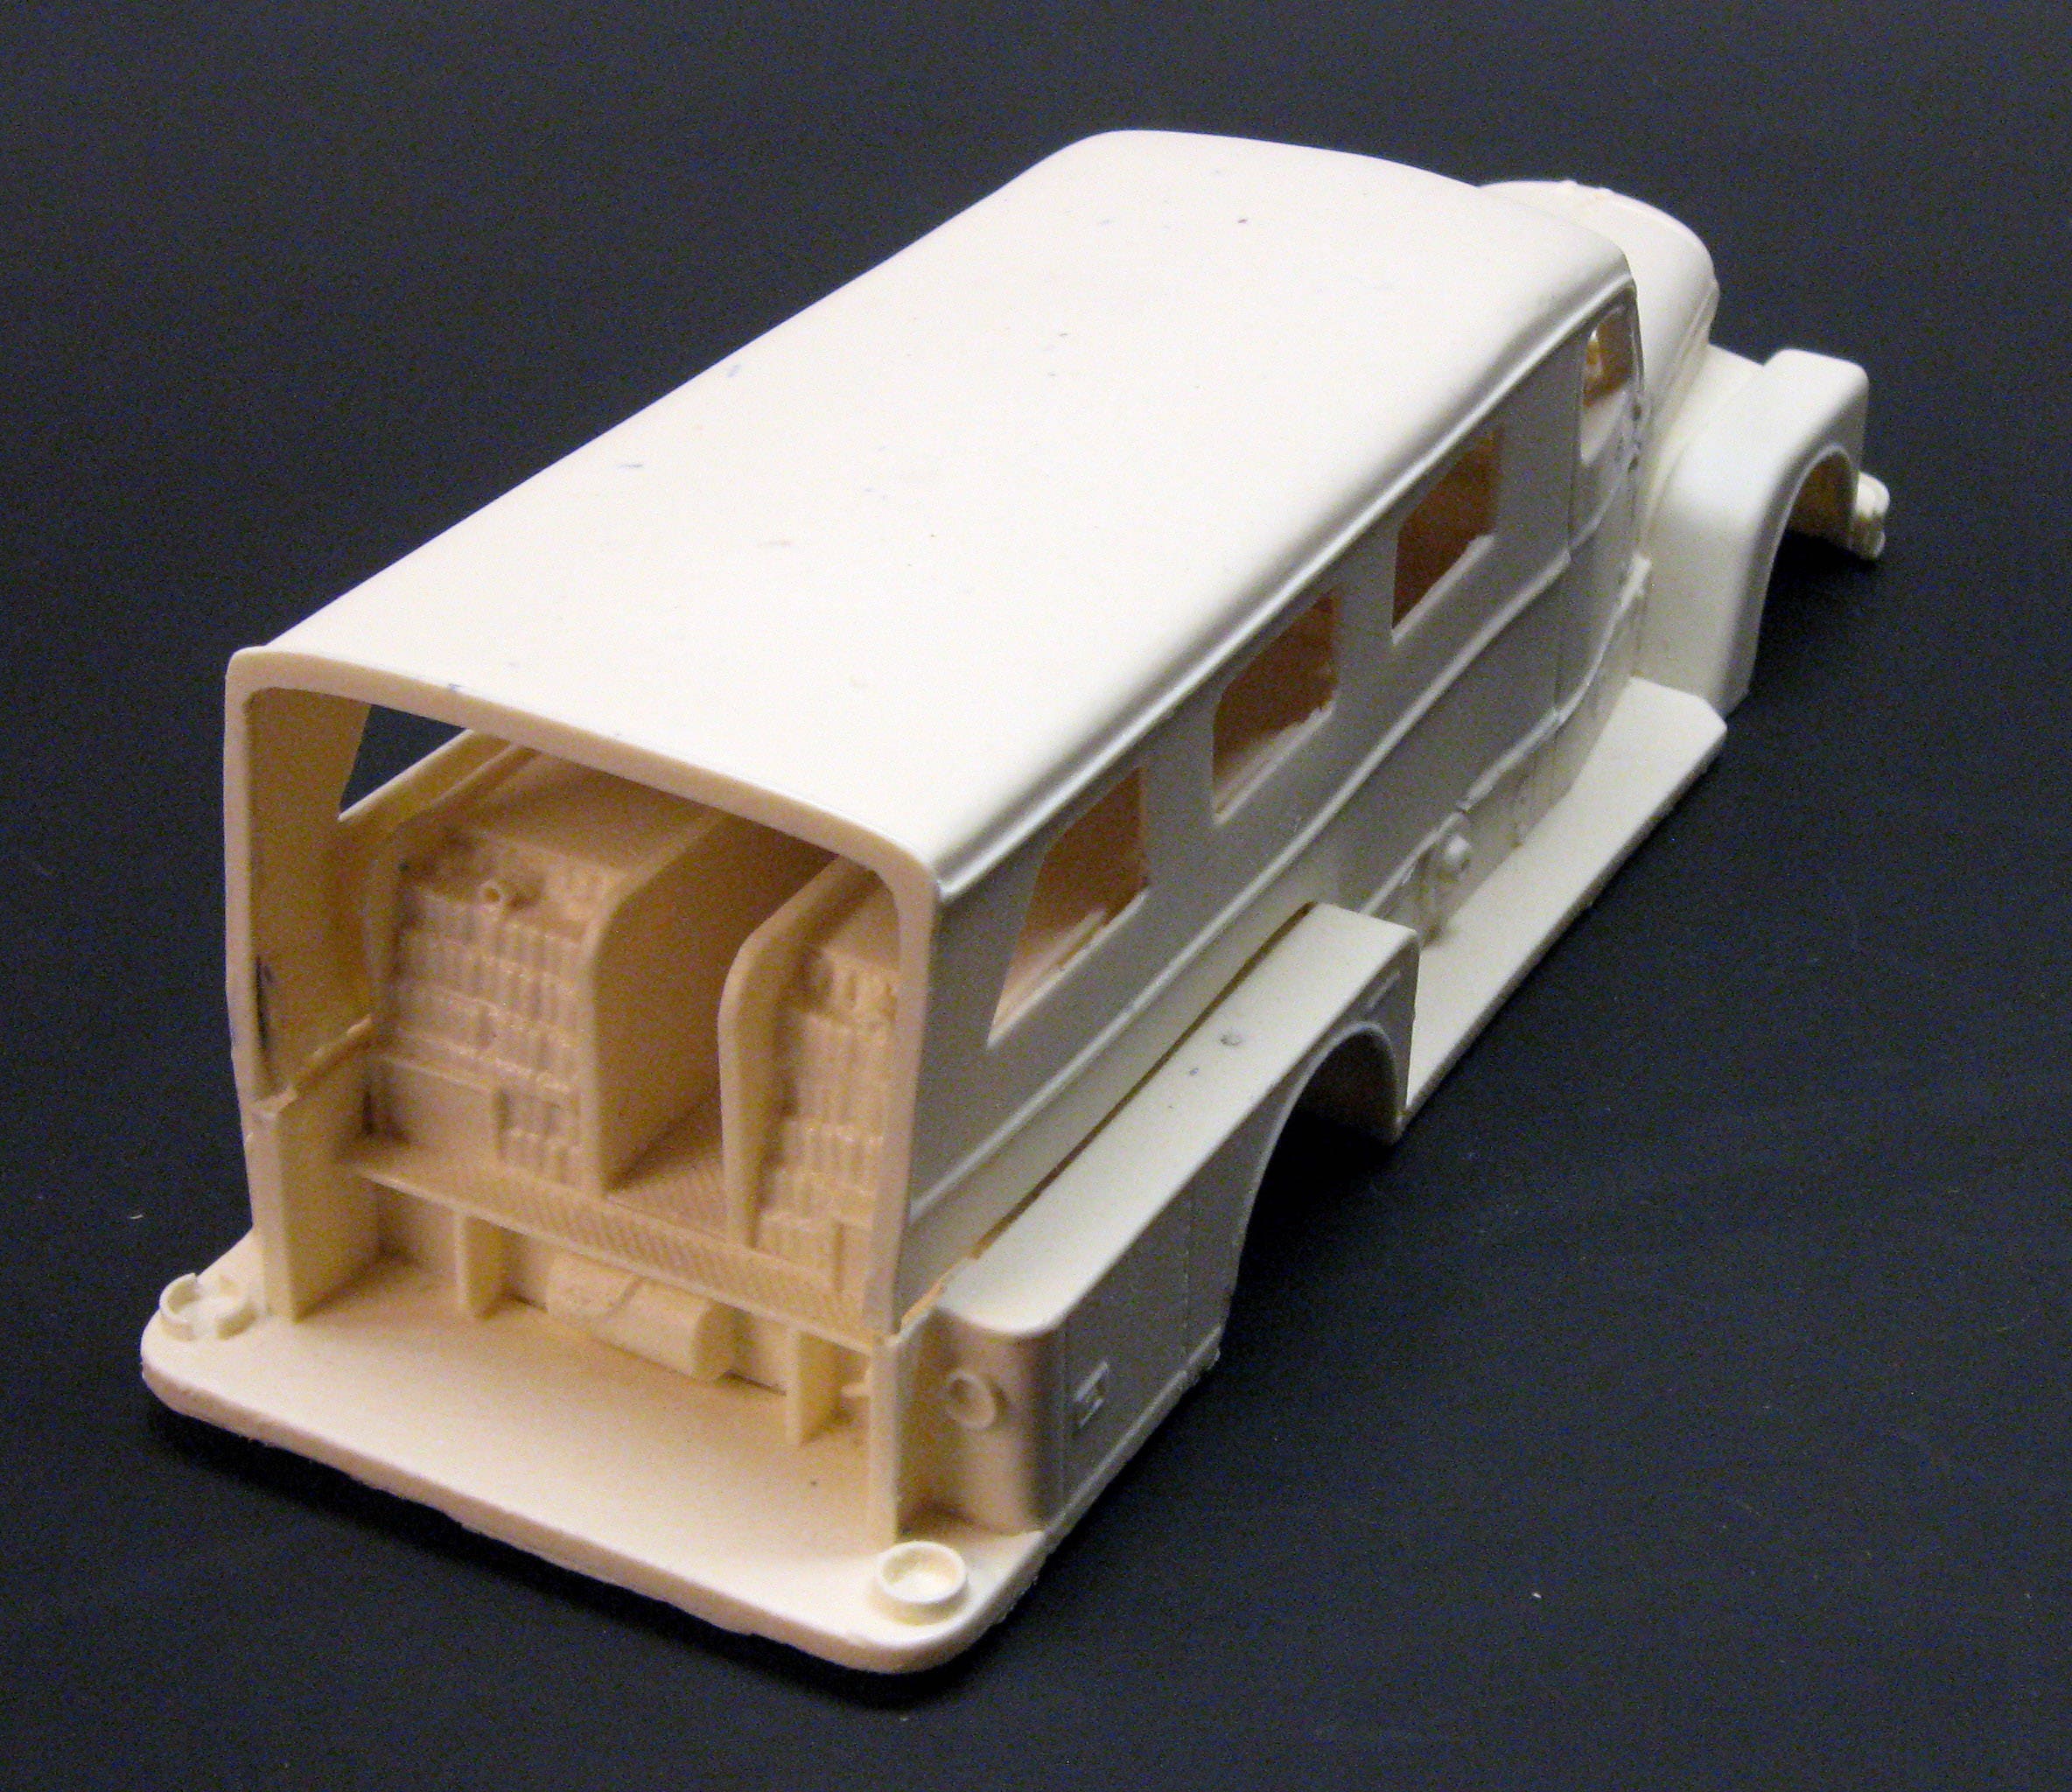 Fire Truck Resin Model Kits